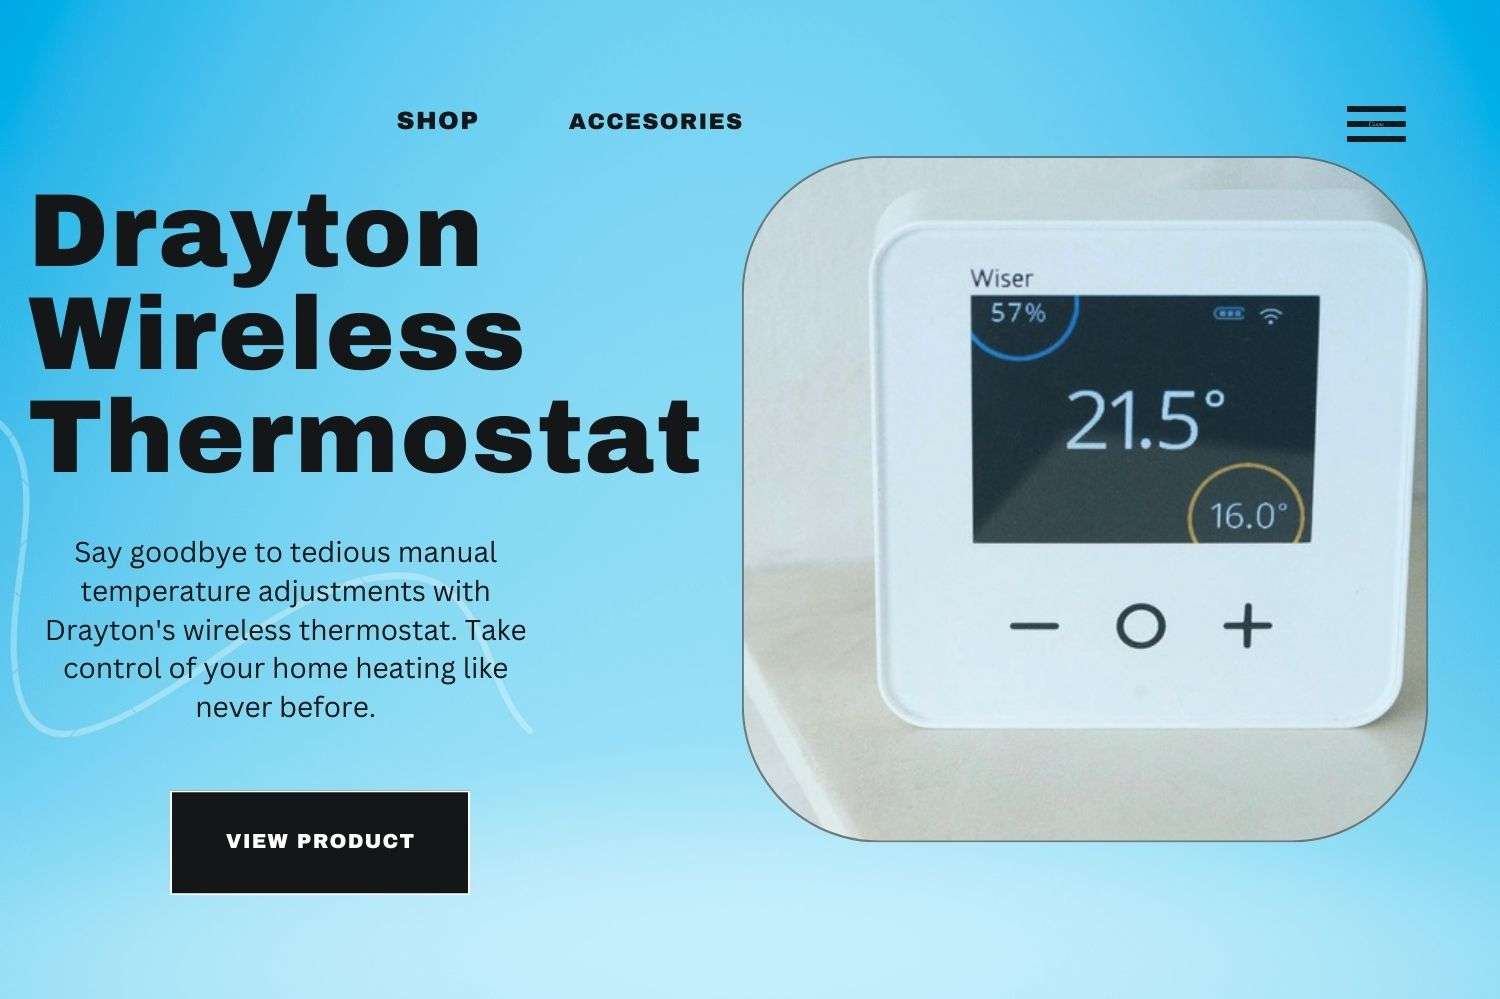 Drayton Wireless Thermostat: Revolutionizing Home Heating Control